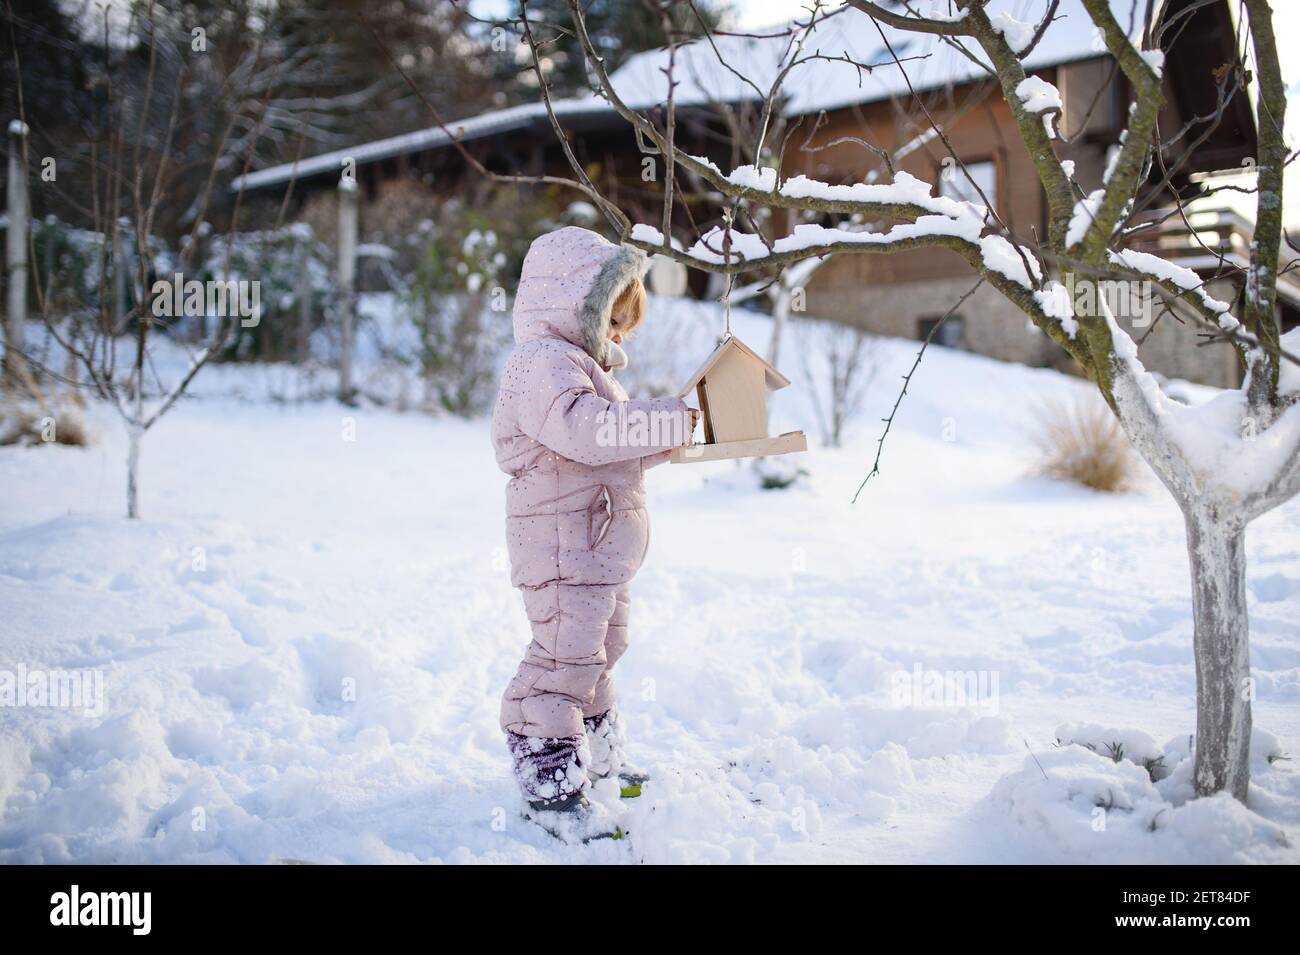 Small girl outdoors in winter garden, standing by wooden bird feeder. Stock Photo